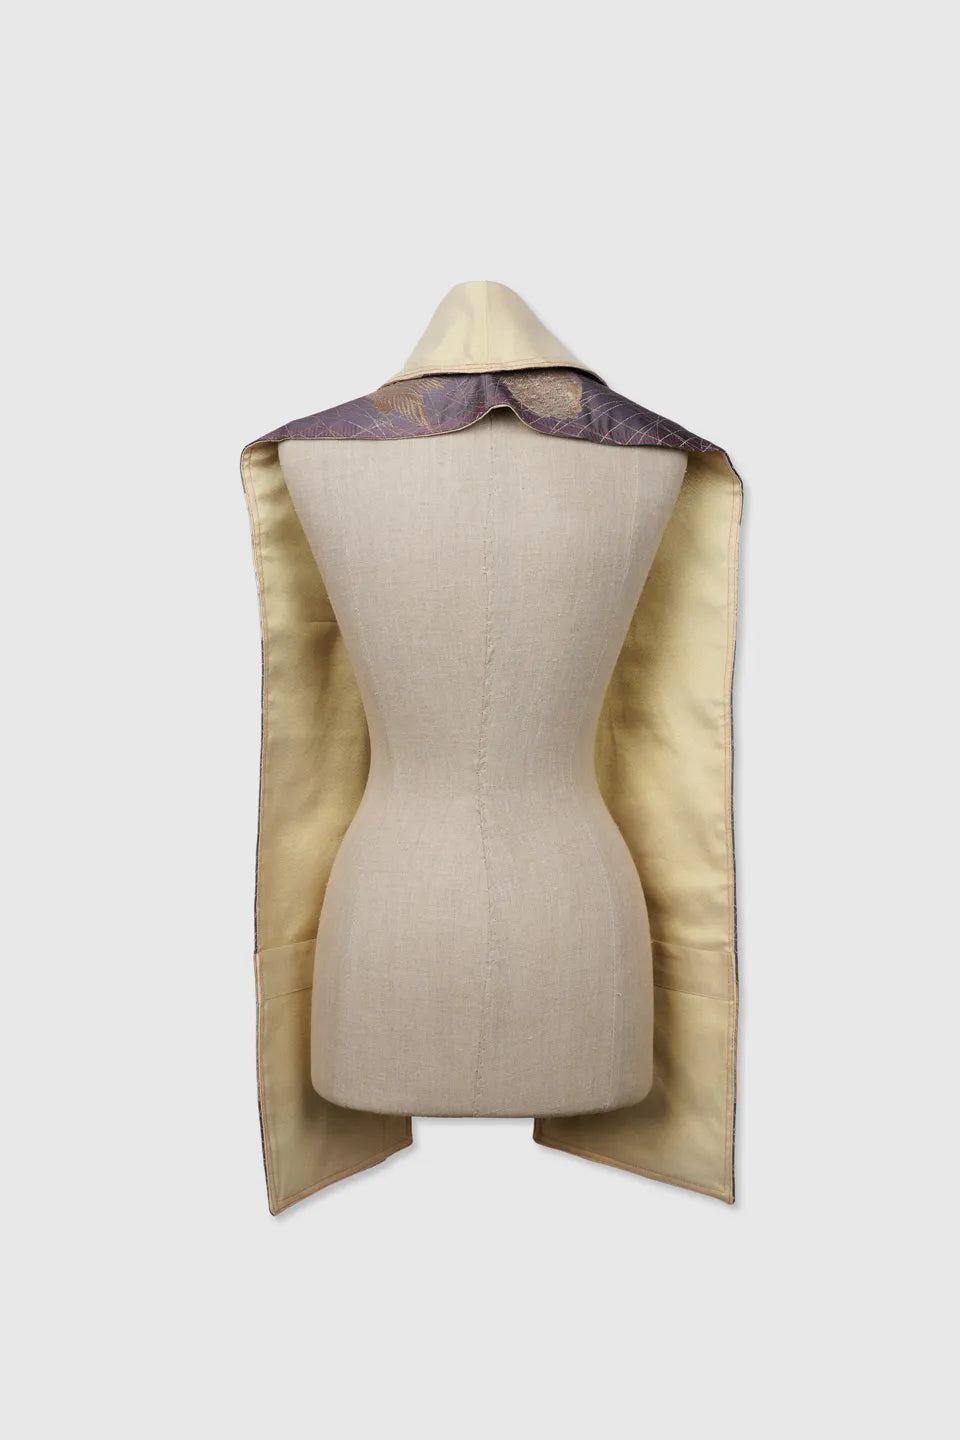 Dual-Sided Silk Stole Scarf | Edna